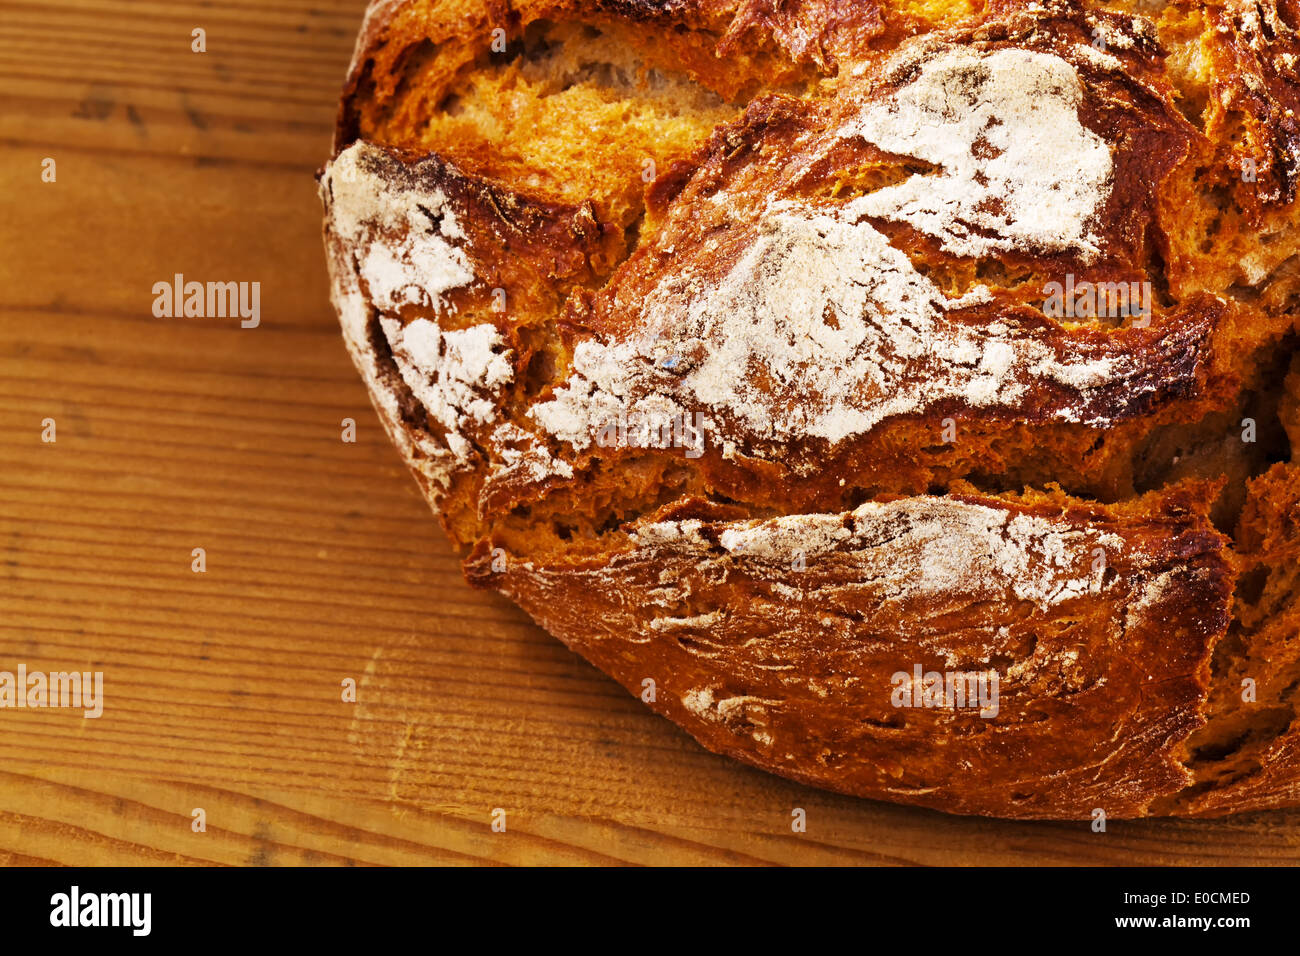 Una pagnotta di pane. Cibo sano da dolci e pasticcini, Ein Laib Brot. Gesunde Ernaehrung durch frische Backwaren. Foto Stock